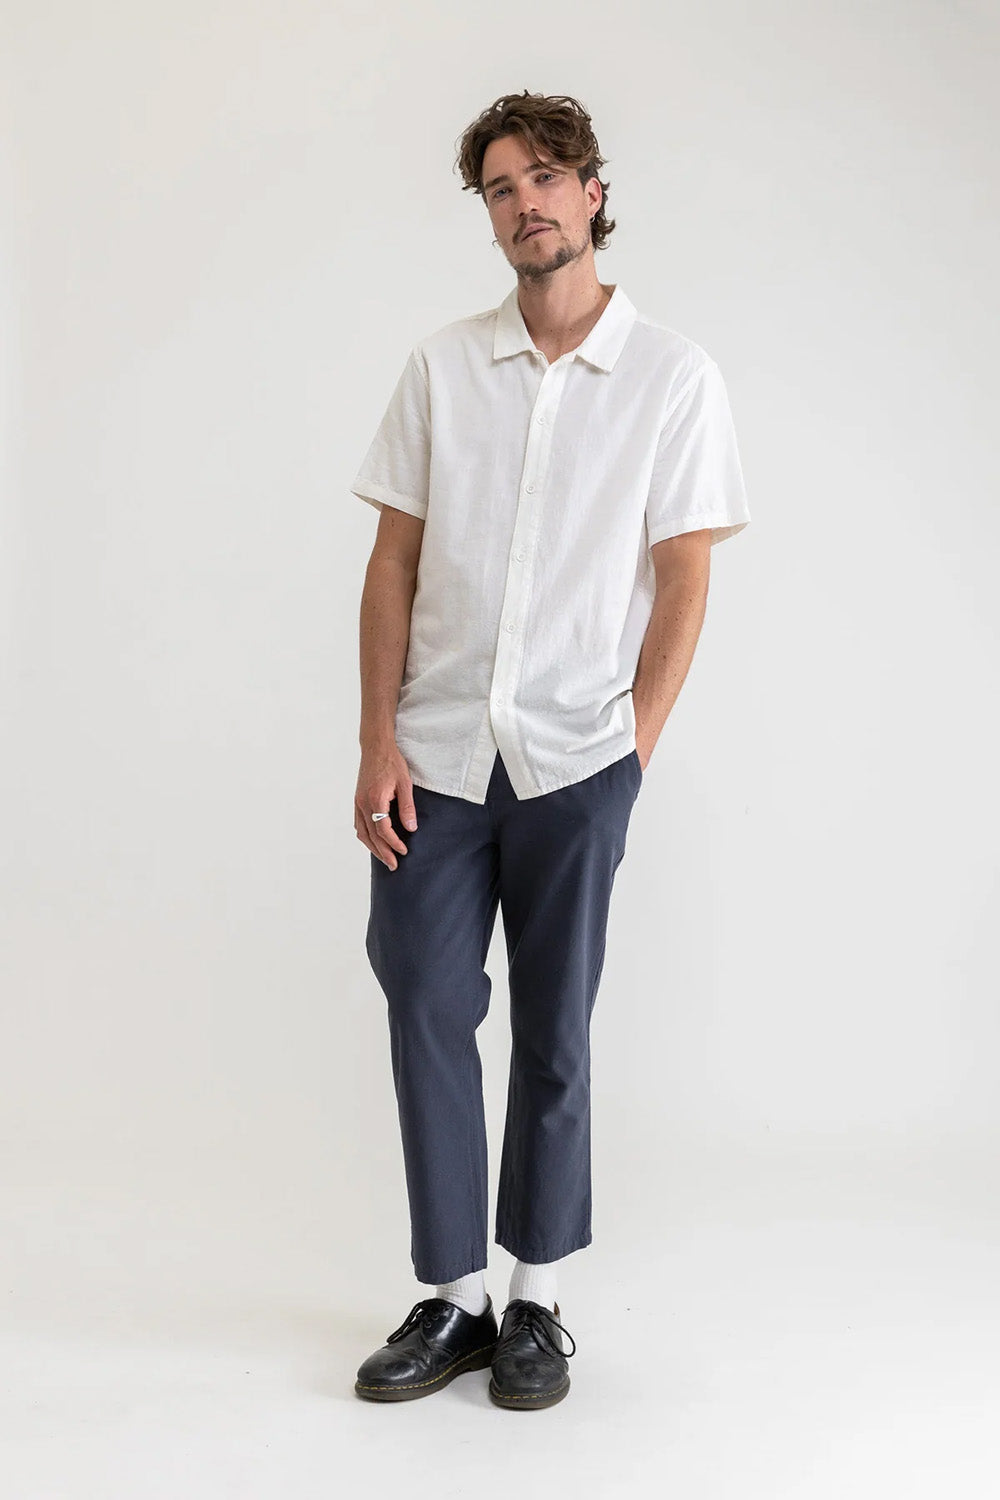 Rhythm - Classic Linen SS Shirt - Vintage White